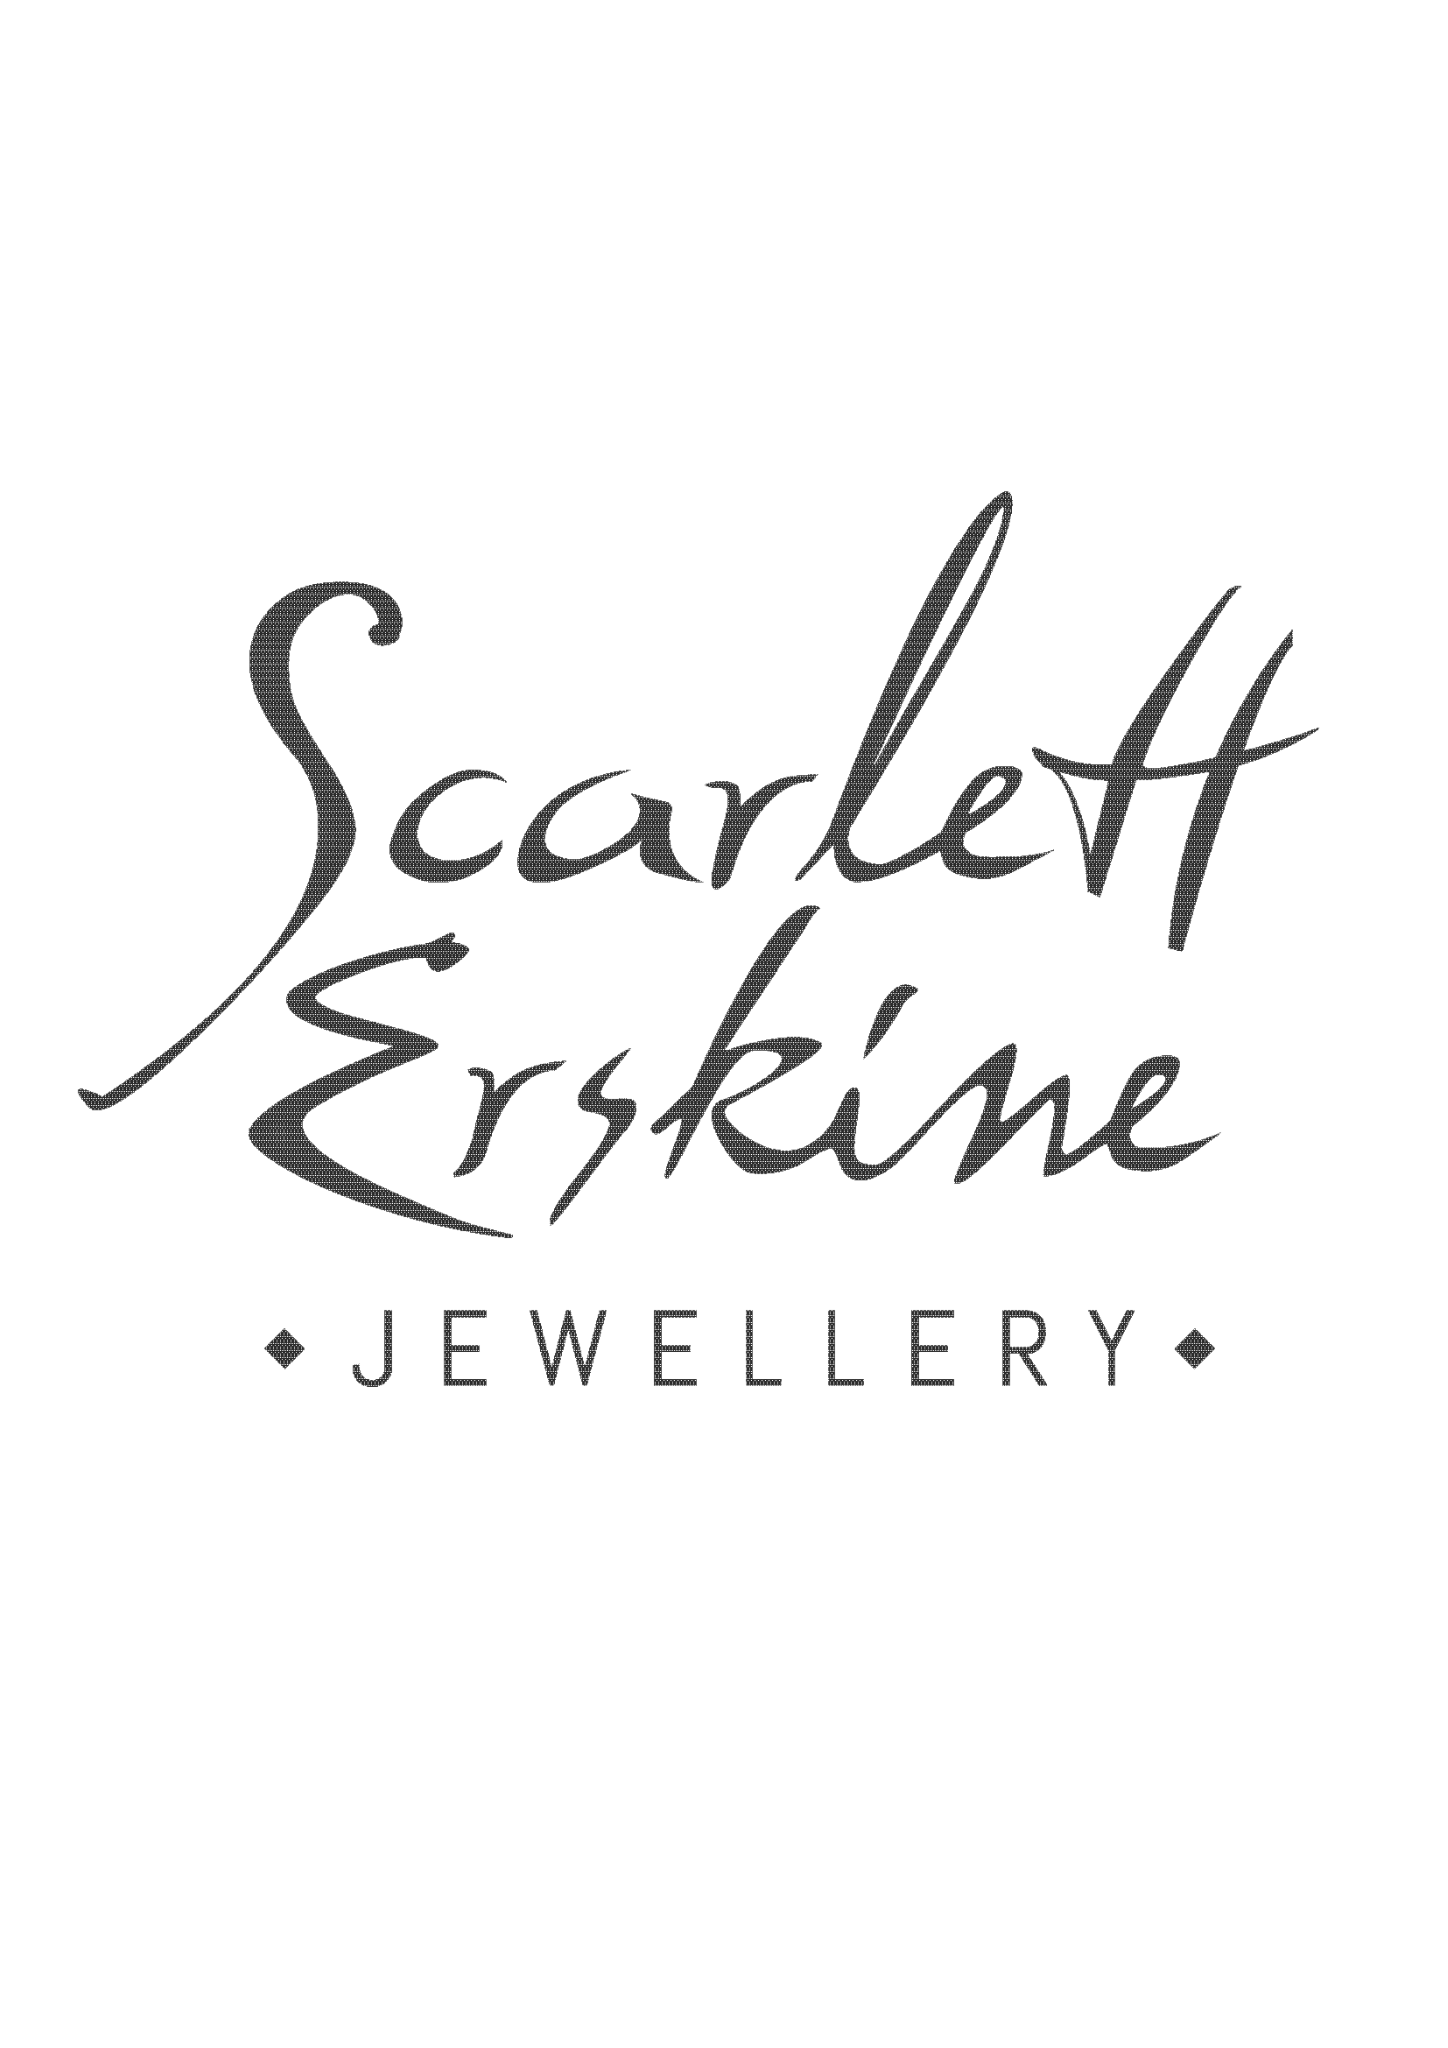 Behind the scenes Exposed the shoot! — Scarlett Erskine Jewellery ...